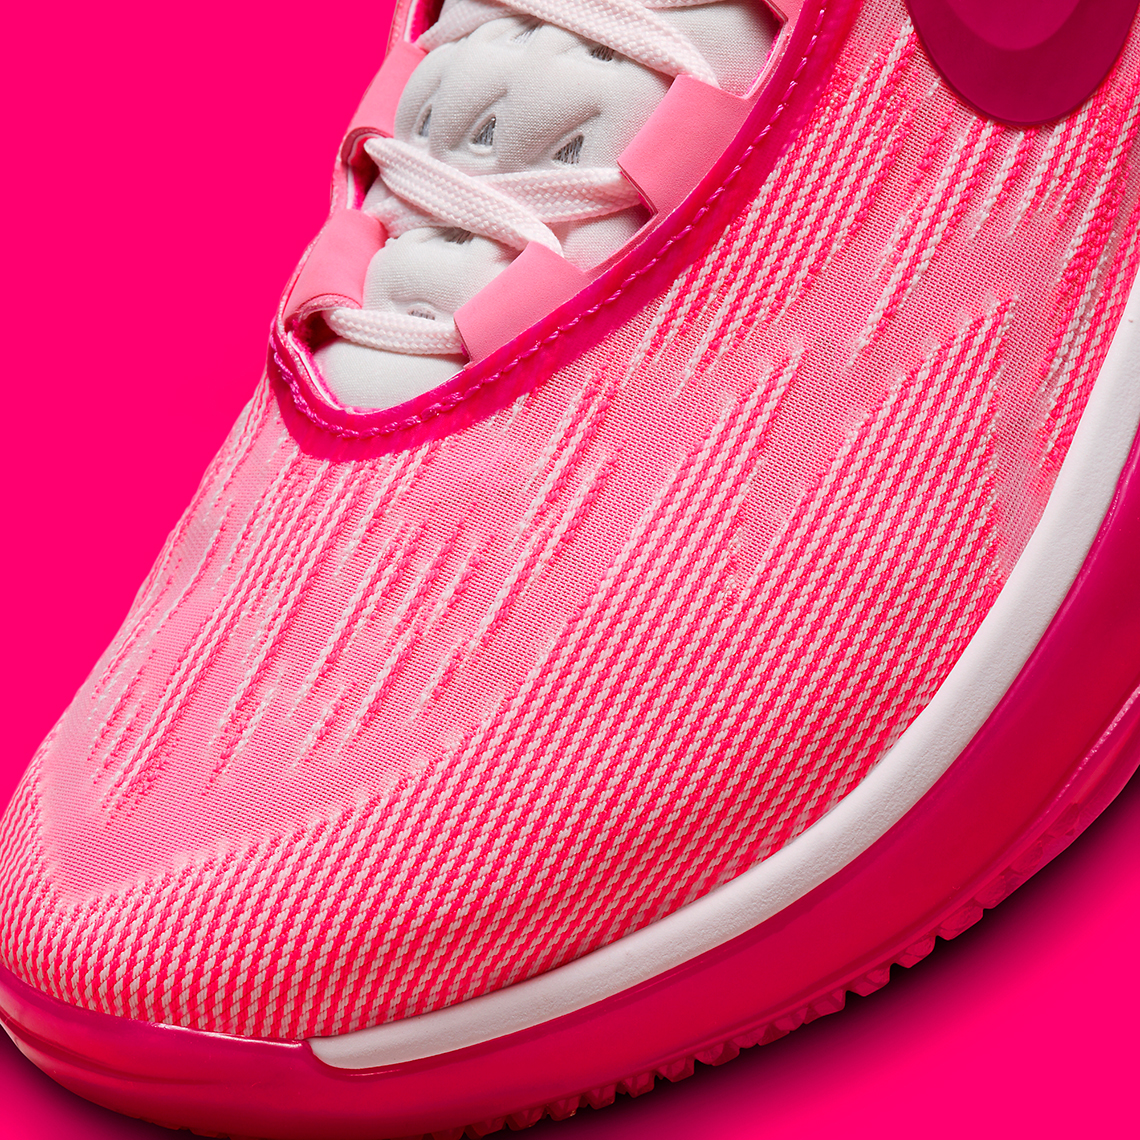 Nike GT Cut 2 in hyper pink. Available at @titan_22 🦩 #nikegtcut2  #nikezoom #kickspotting #gtcut2 #nikebasketball